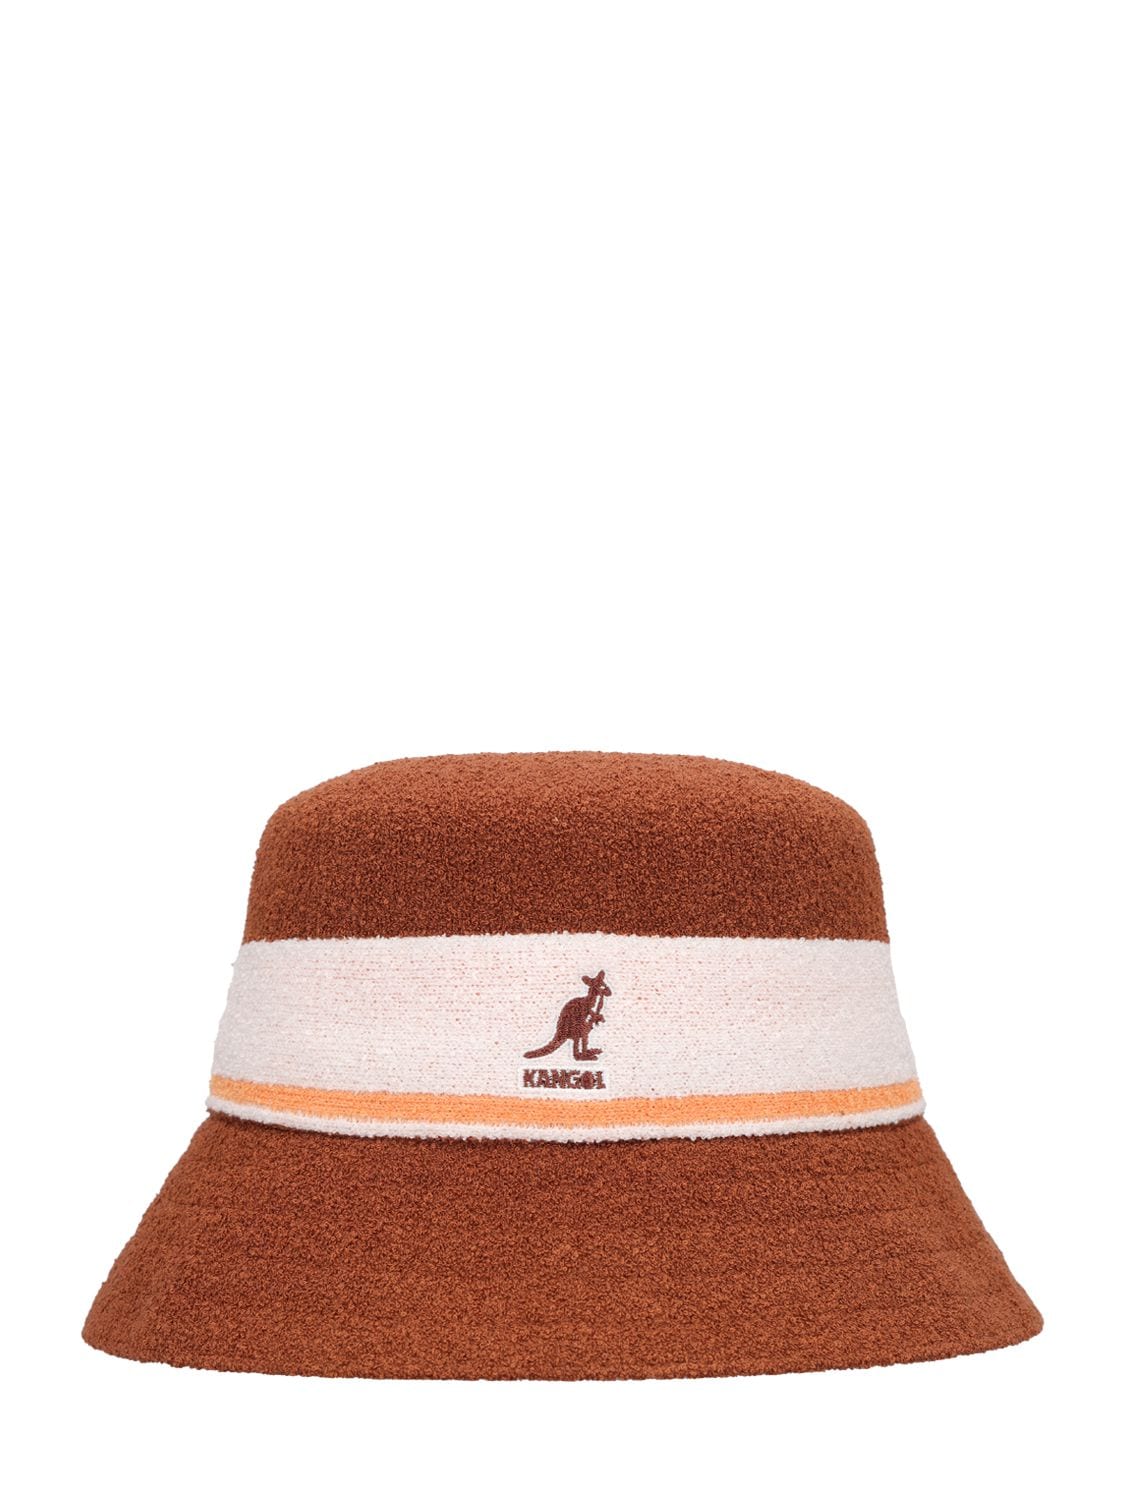 Kangol Bermuda条纹渔夫帽 In Brown